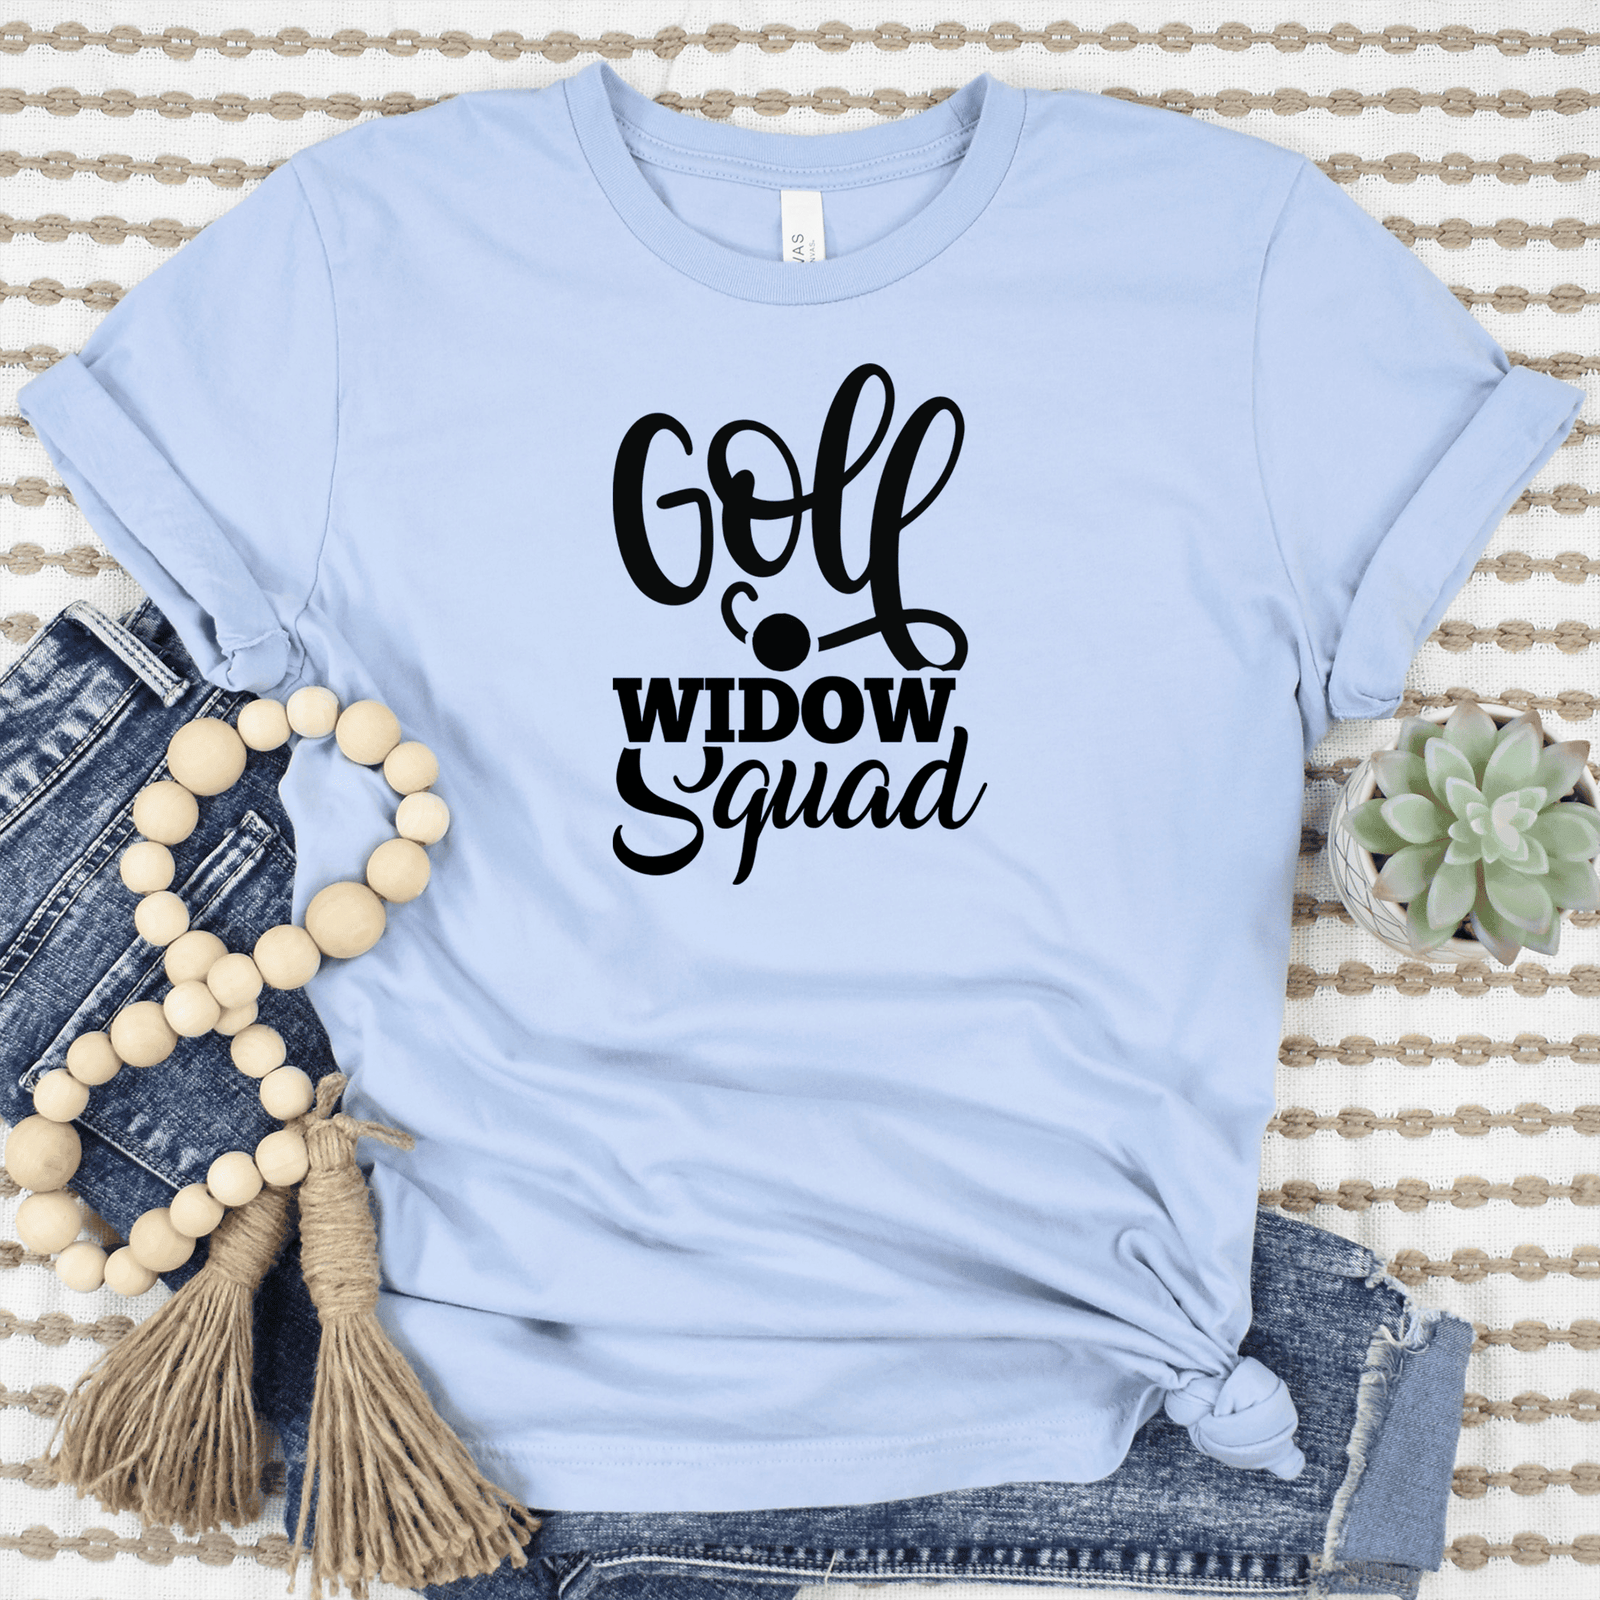 Womens Light Blue T Shirt with Golf-Widow-Squad design